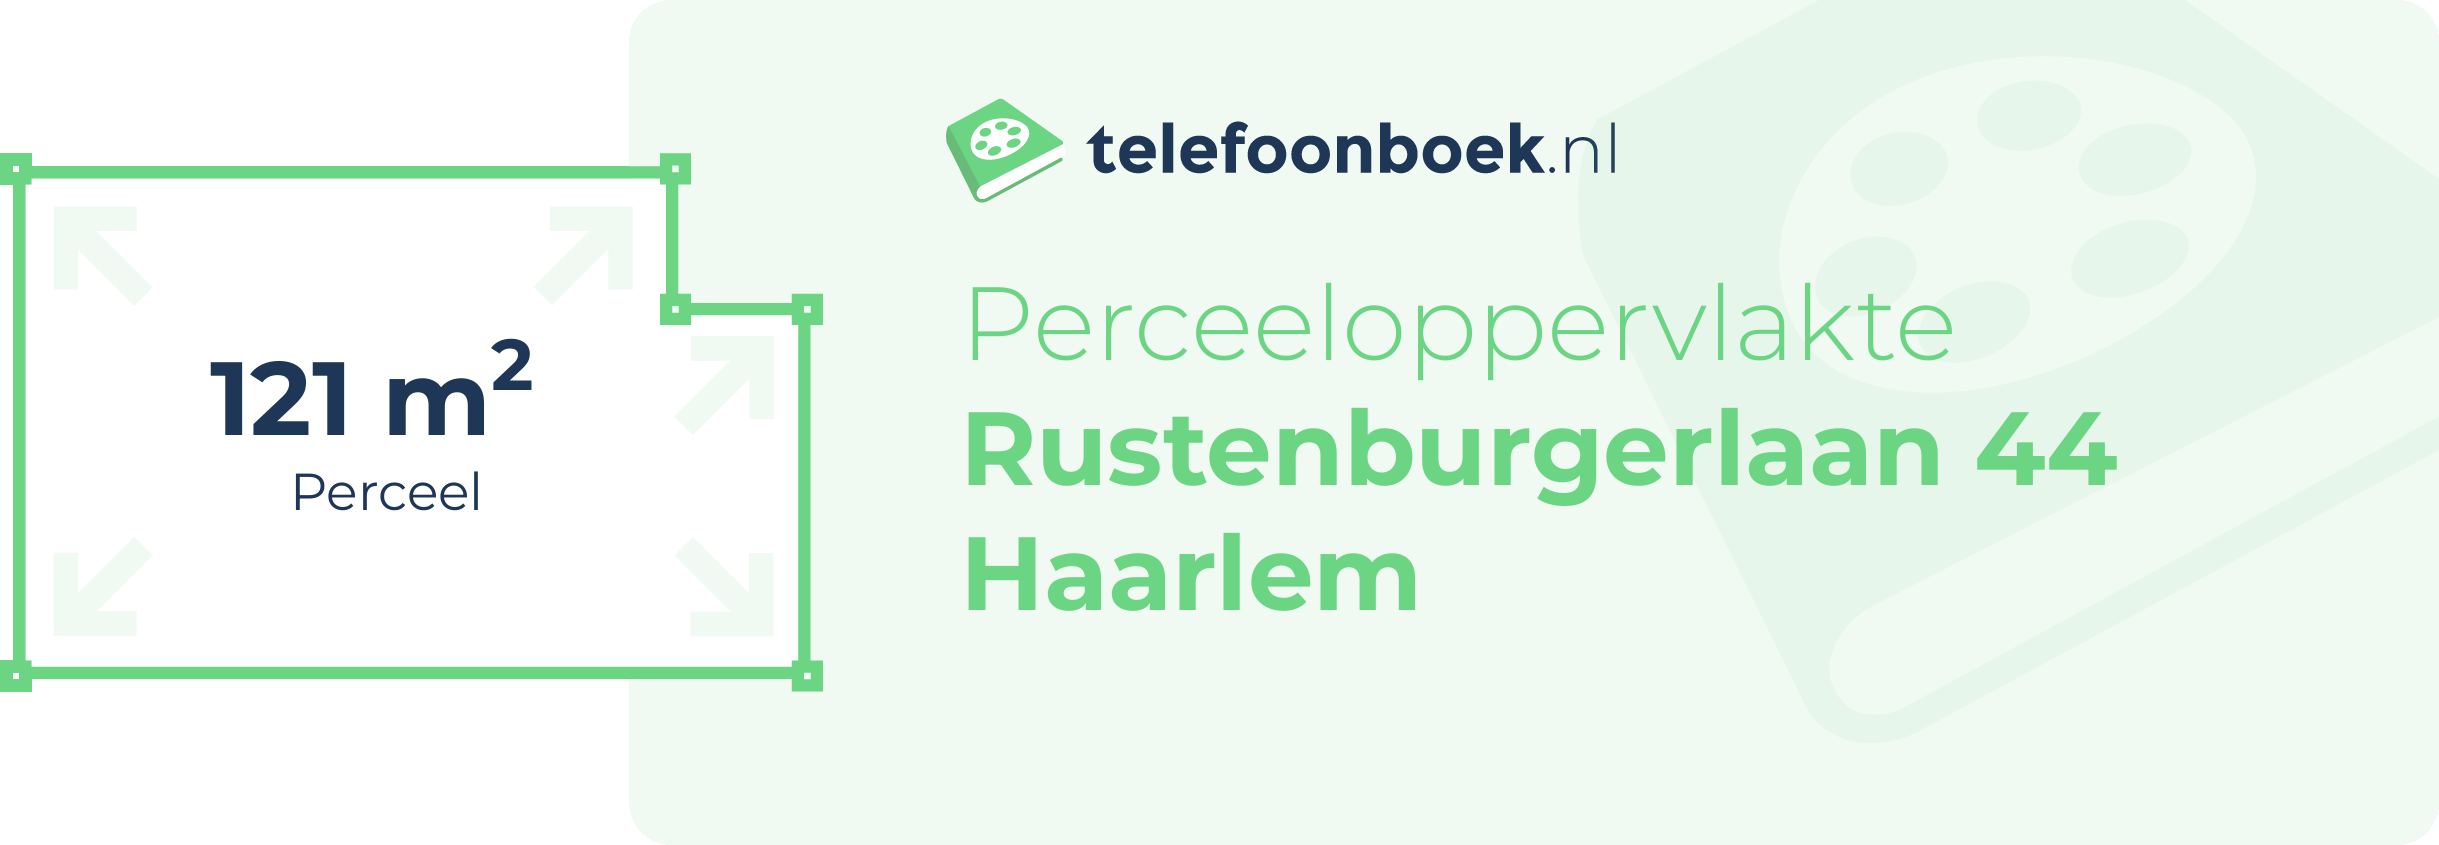 Perceeloppervlakte Rustenburgerlaan 44 Haarlem